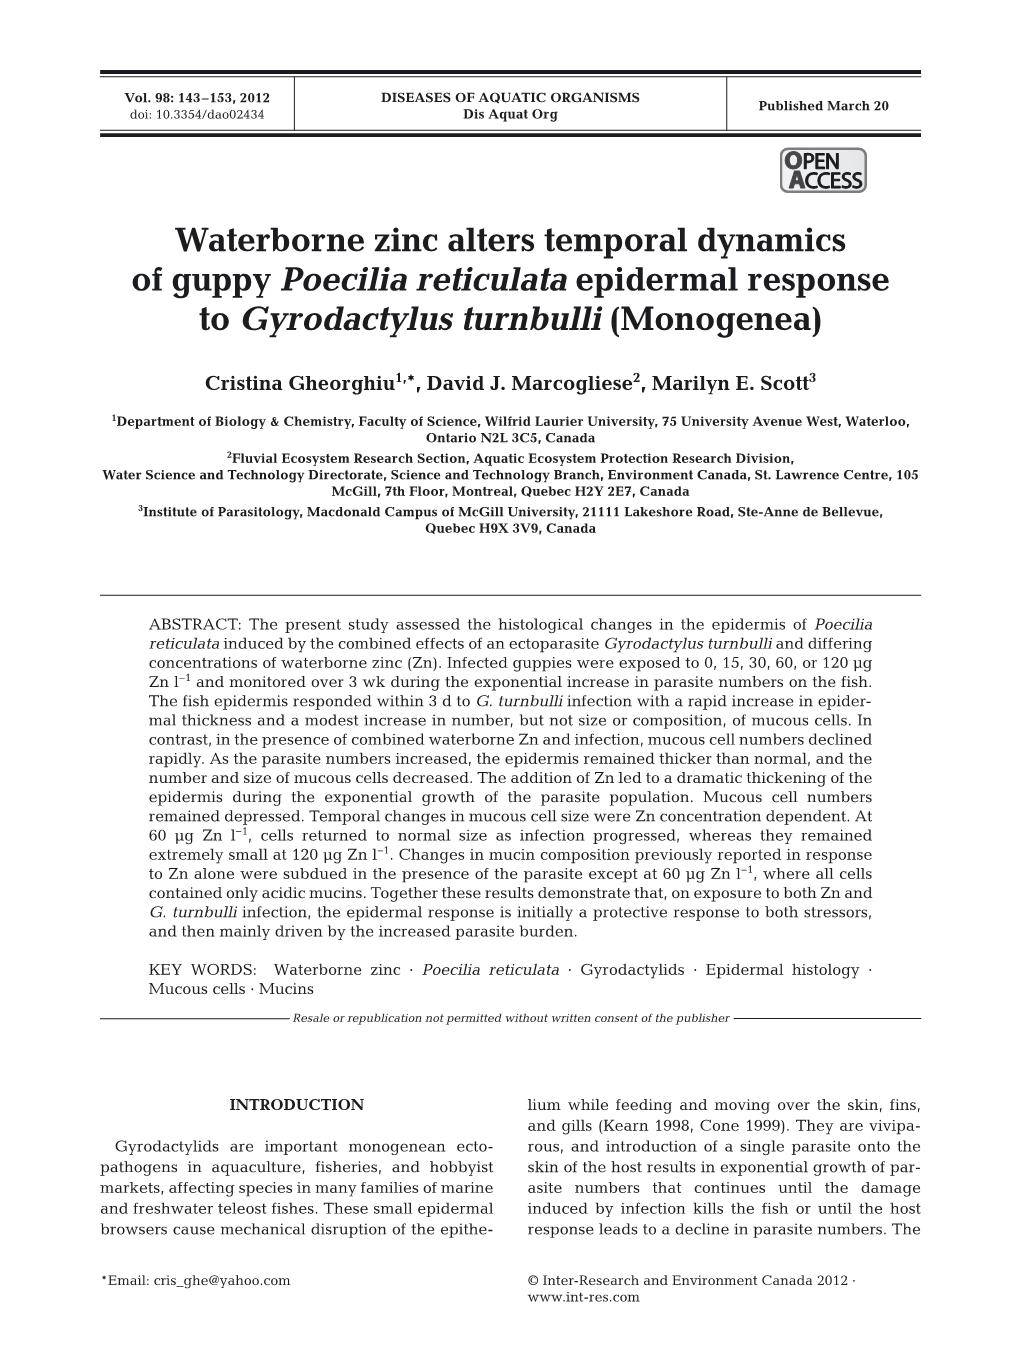 Waterborne Zinc Alters Temporal Dynamics of Guppy Poecilia Reticulata Epidermal Response to Gyrodactylus Turnbulli (Monogenea)